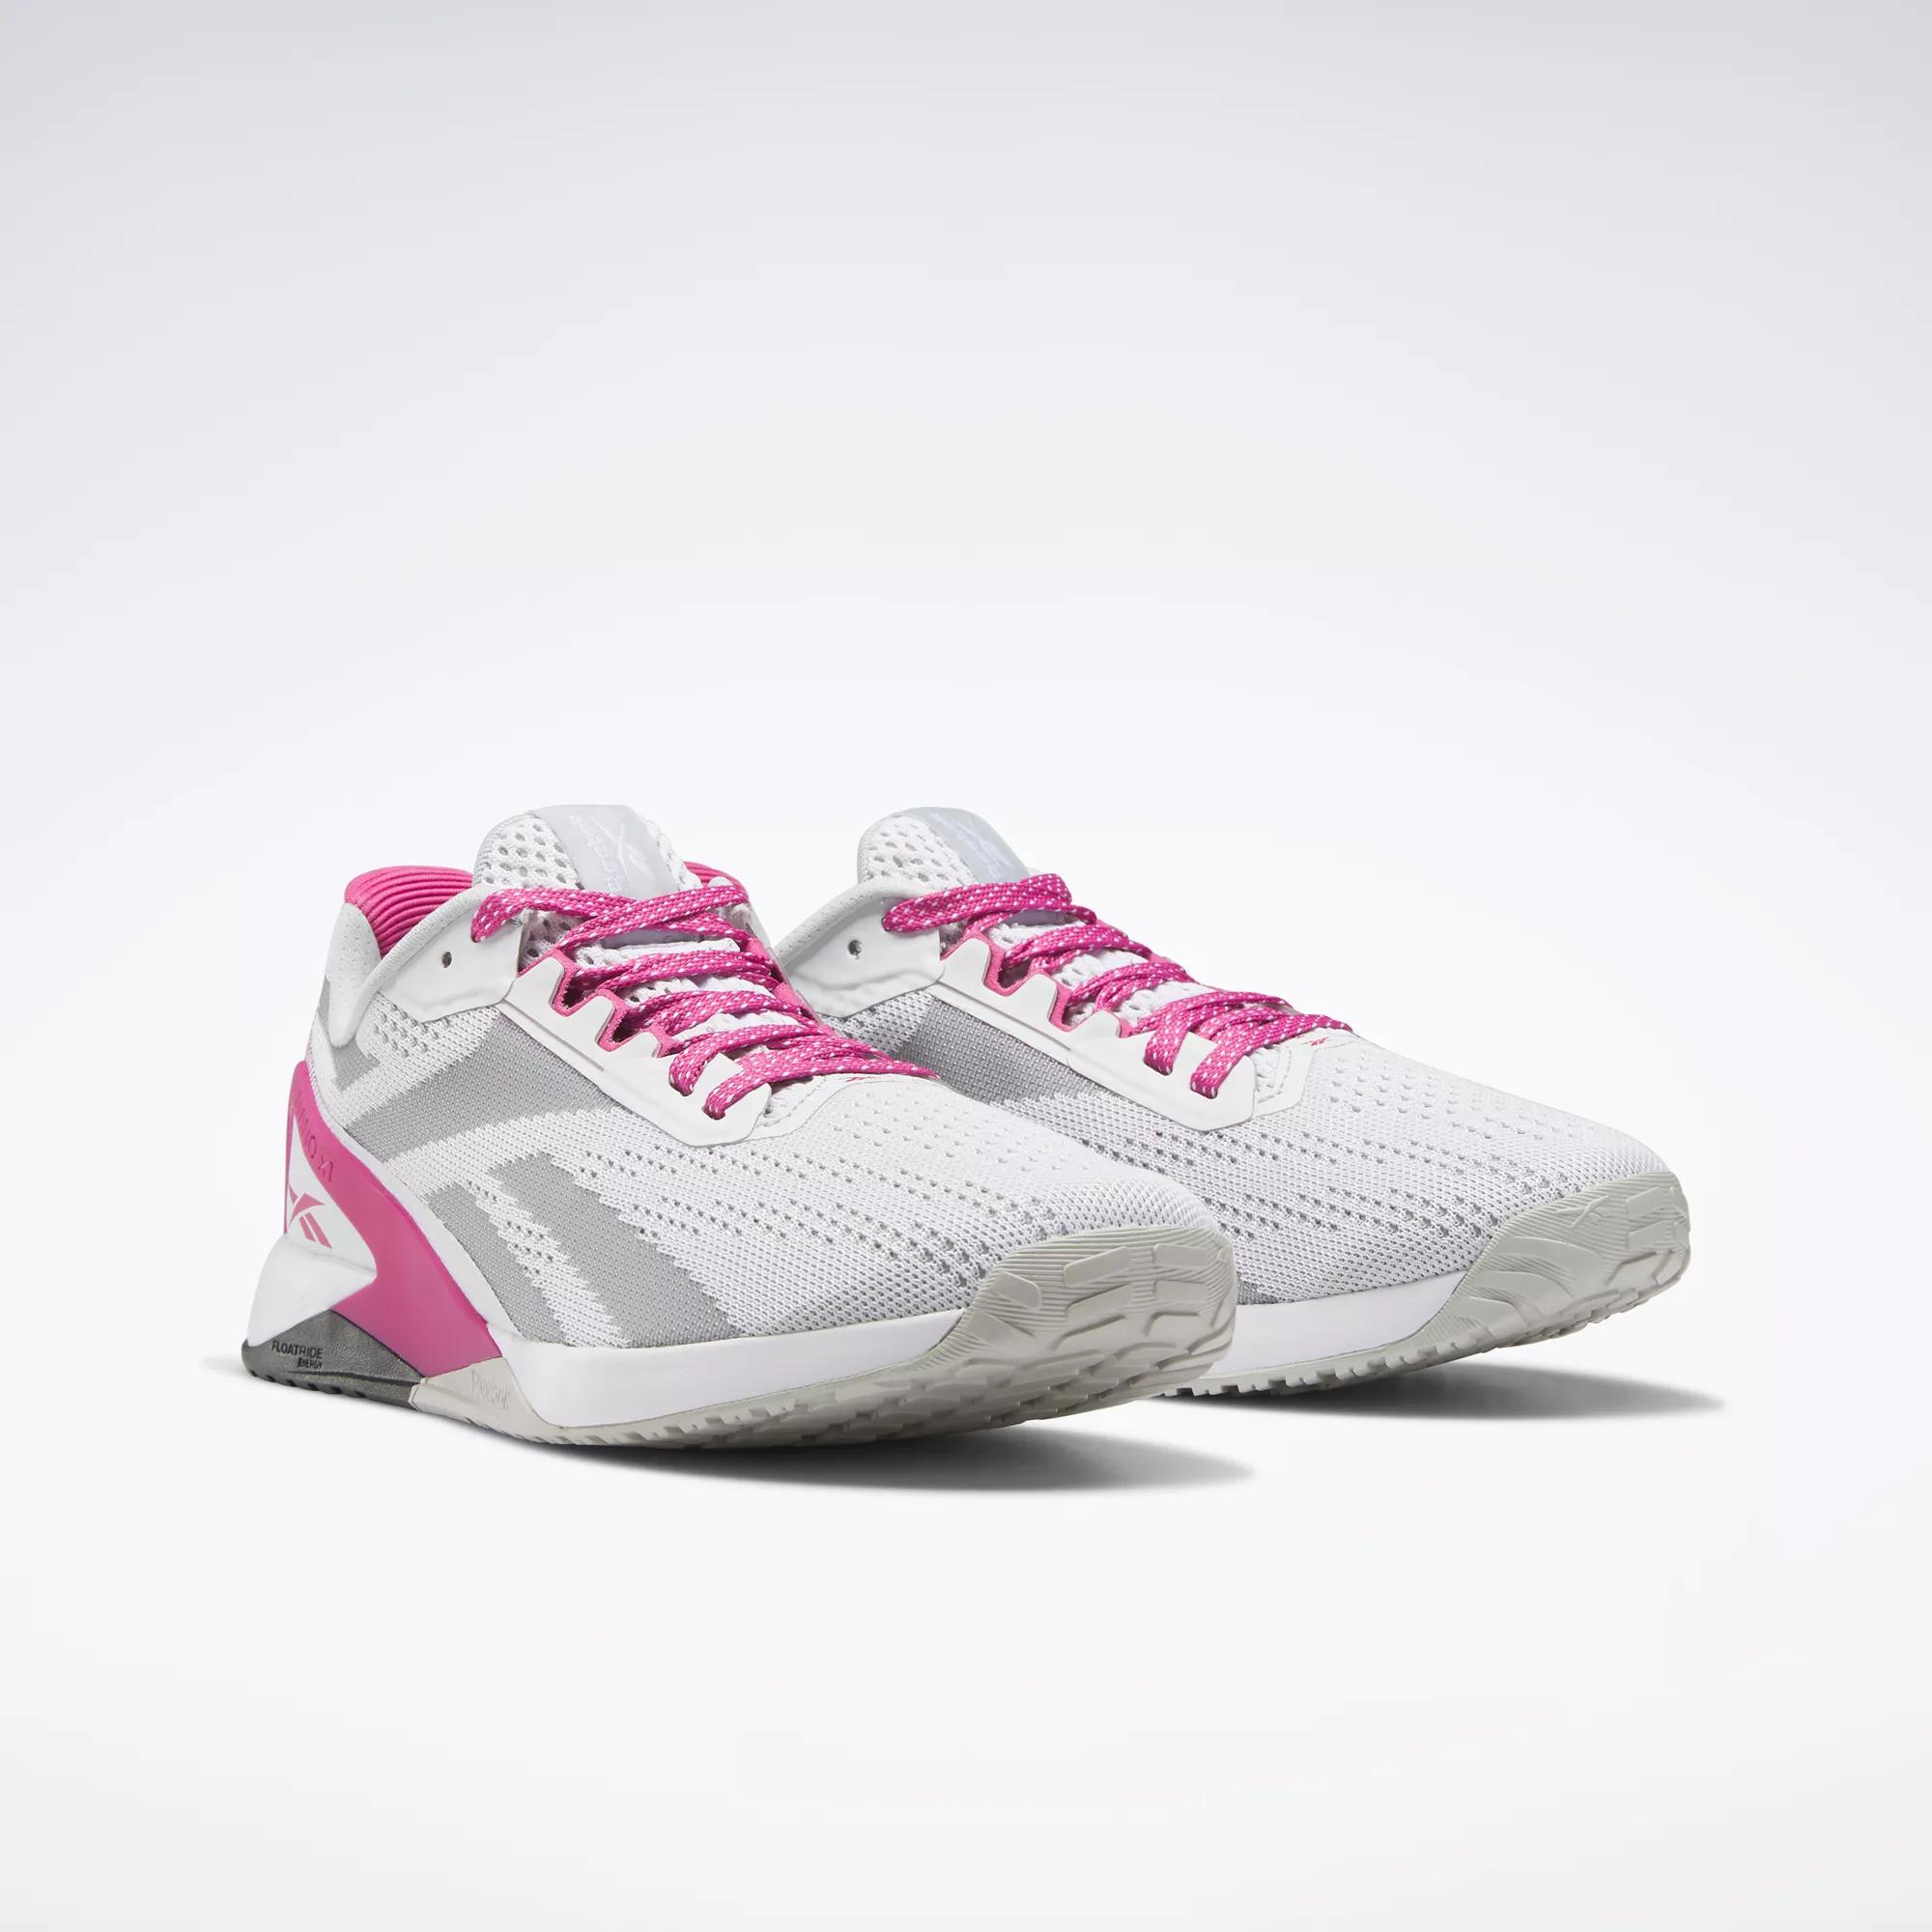 Prevalecer Envolver tomar Nano X1 Women's Training Shoes - Ftwr White / Semi Proud Pink / Pure Grey 2  | Reebok